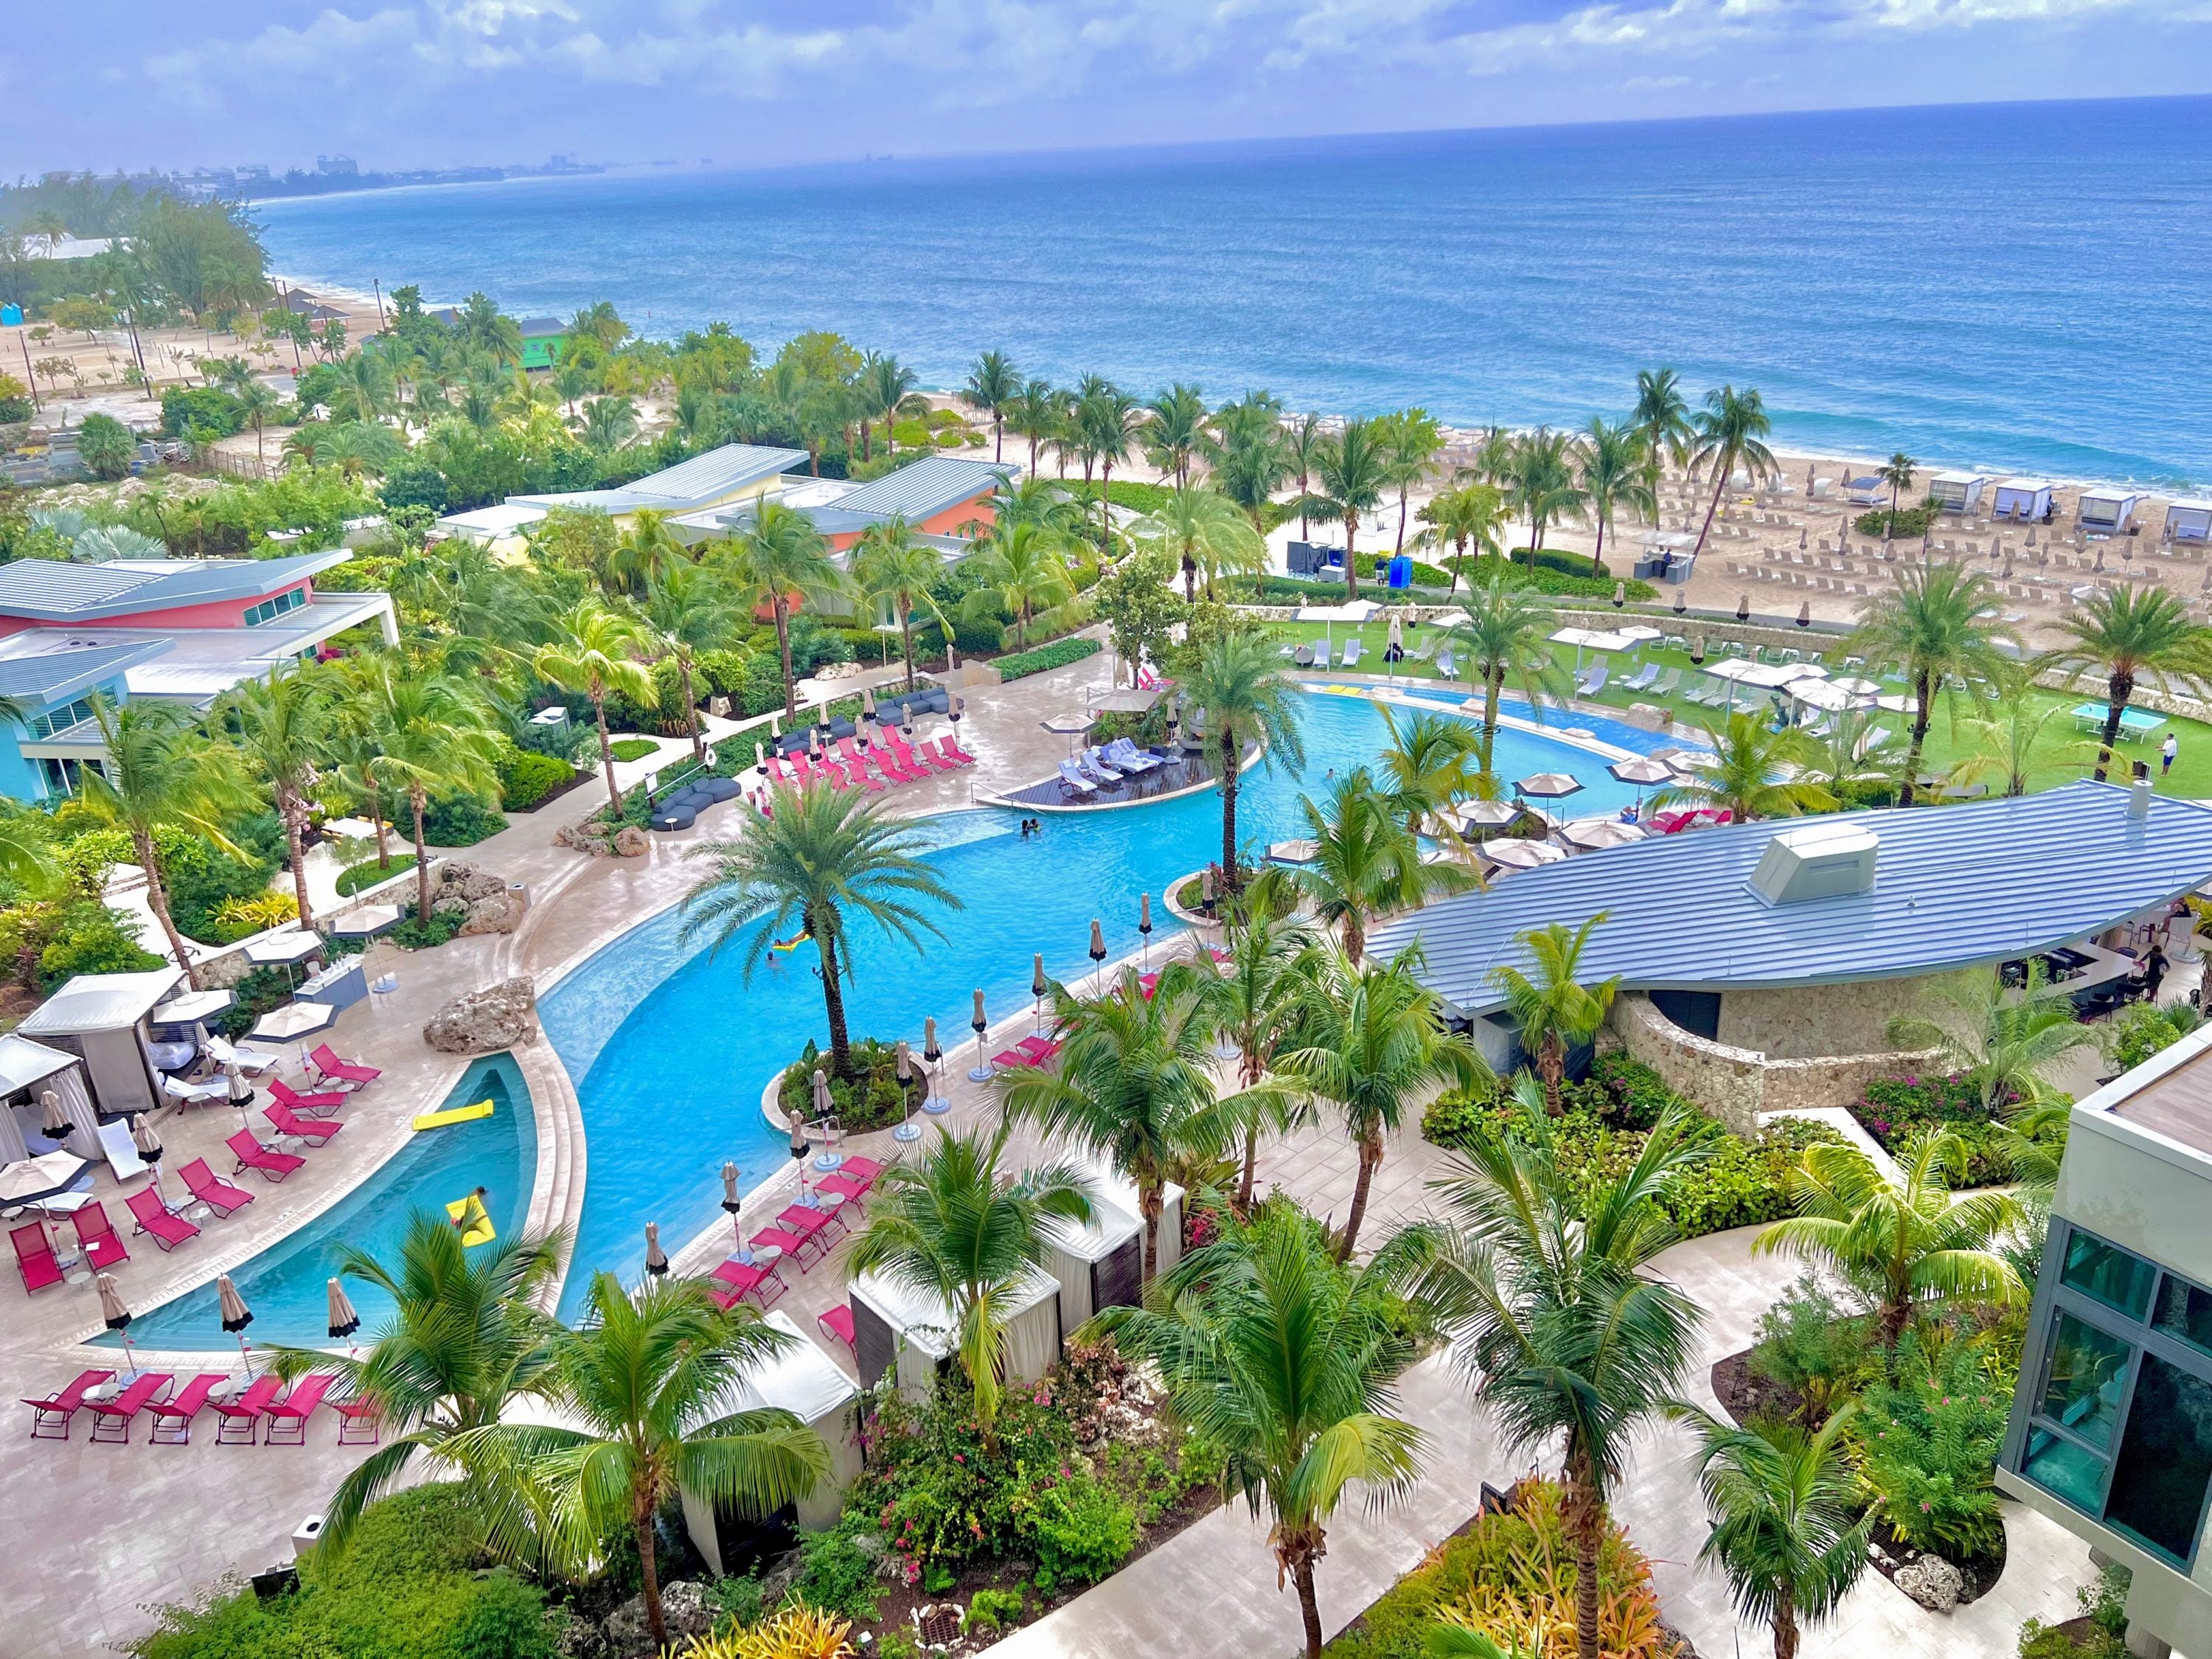 Kimpton Seafire Resort and Spa in Grand Cayman